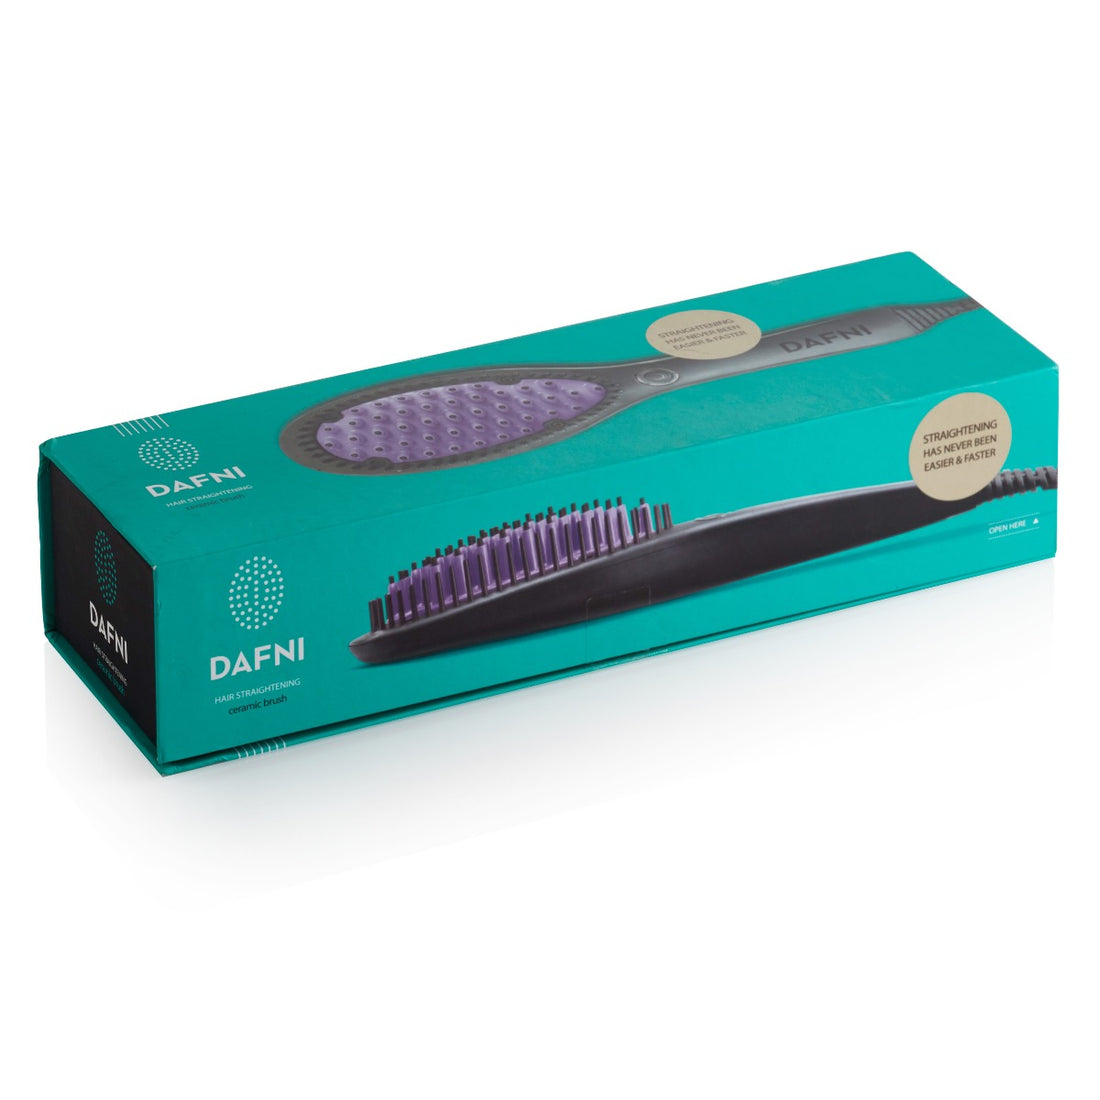 DAFNI Hair Straightening Ceramic Brush